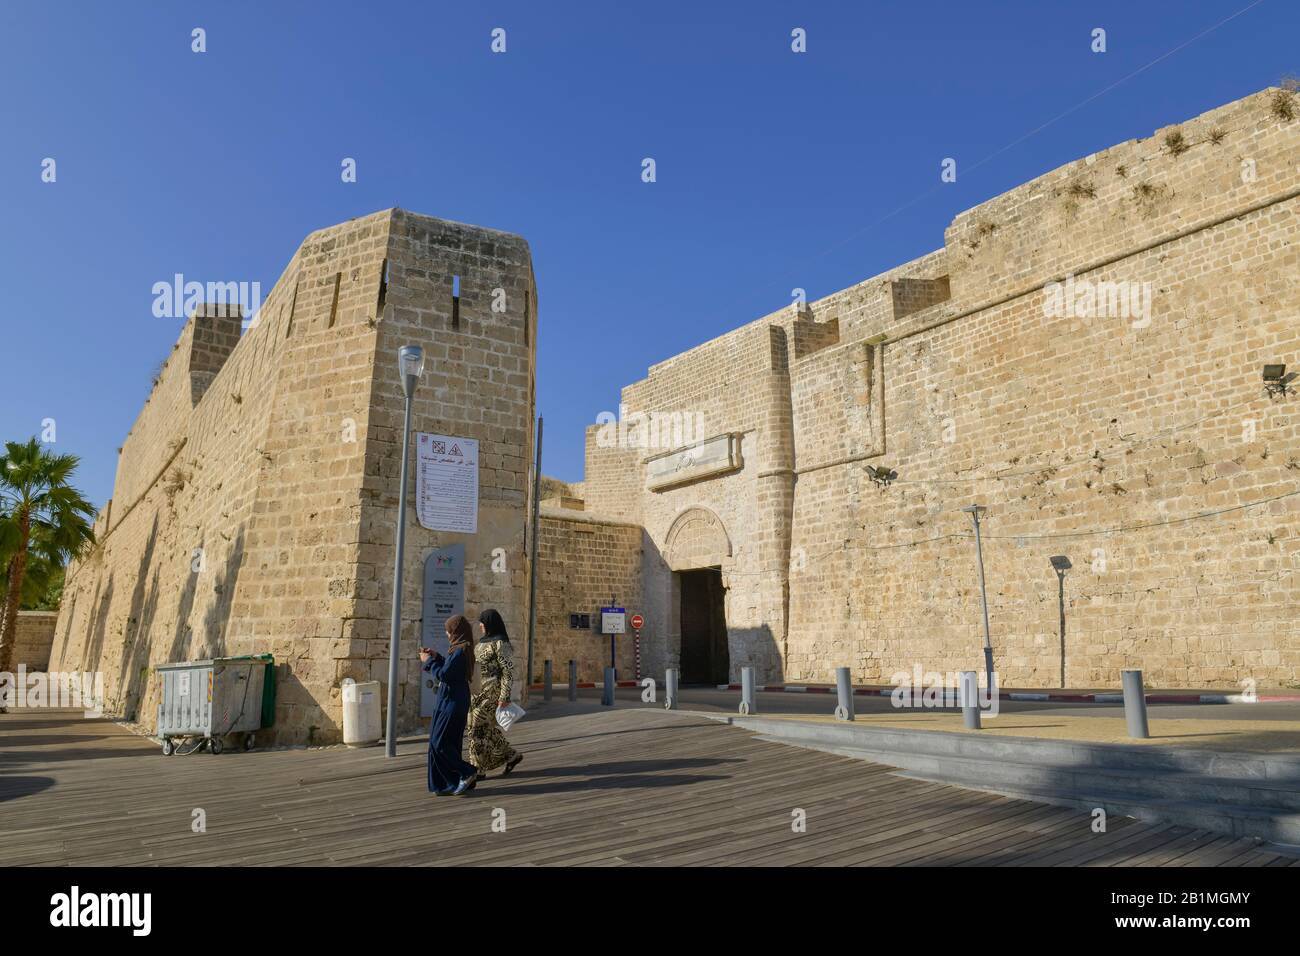 Stadttor 'Land gate', Akko, Israel Stock Photo